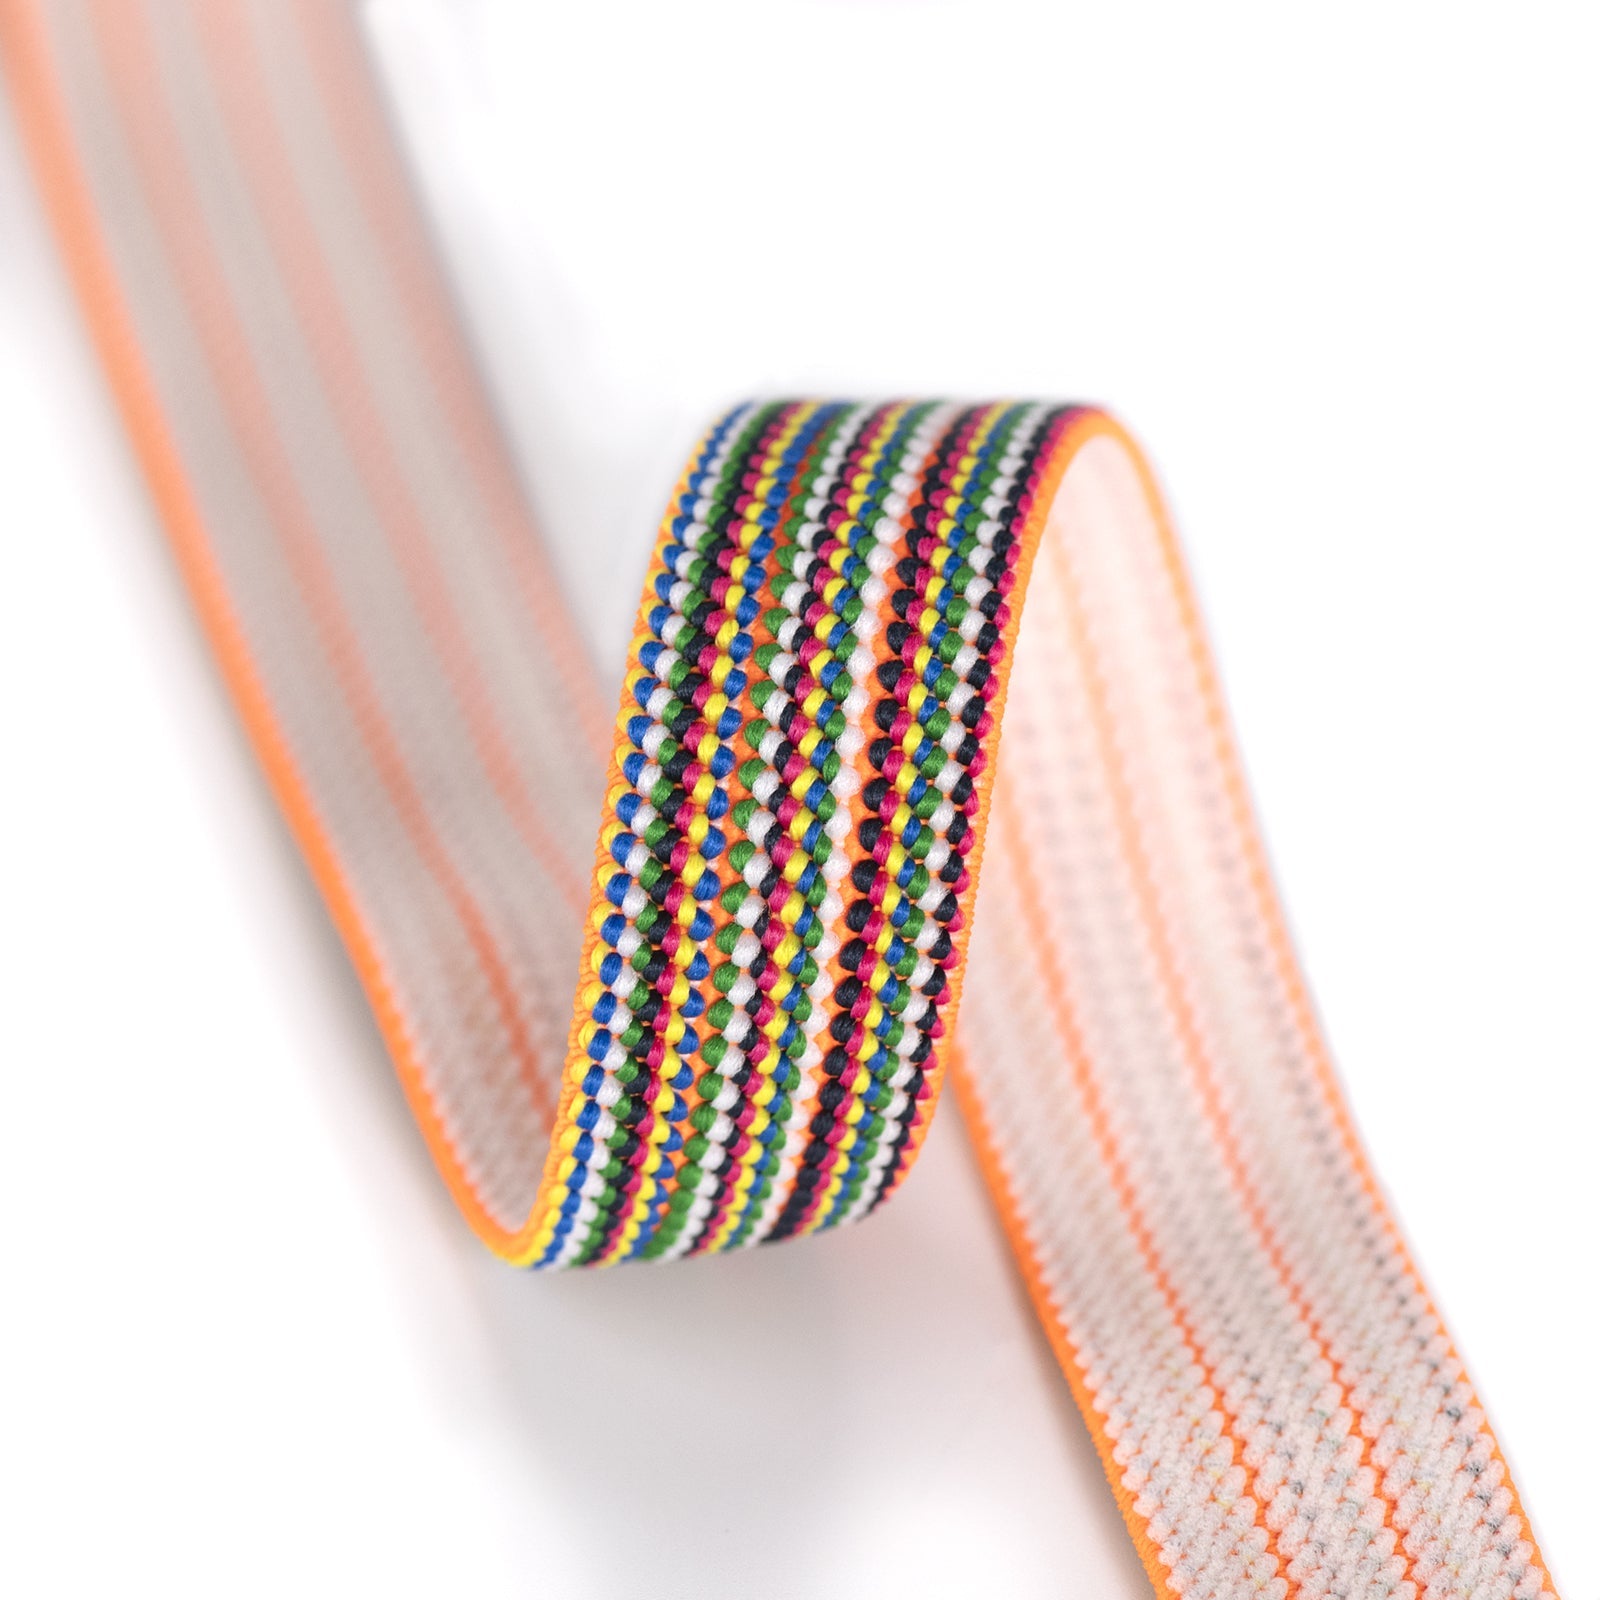 EXCEART 6mm Elastic Band Elastic Watch Band Color Rubber Bands Colored  Rubber Bands Stretch Elastic Strap Sewing Strap Picot Sewing Elastic Band